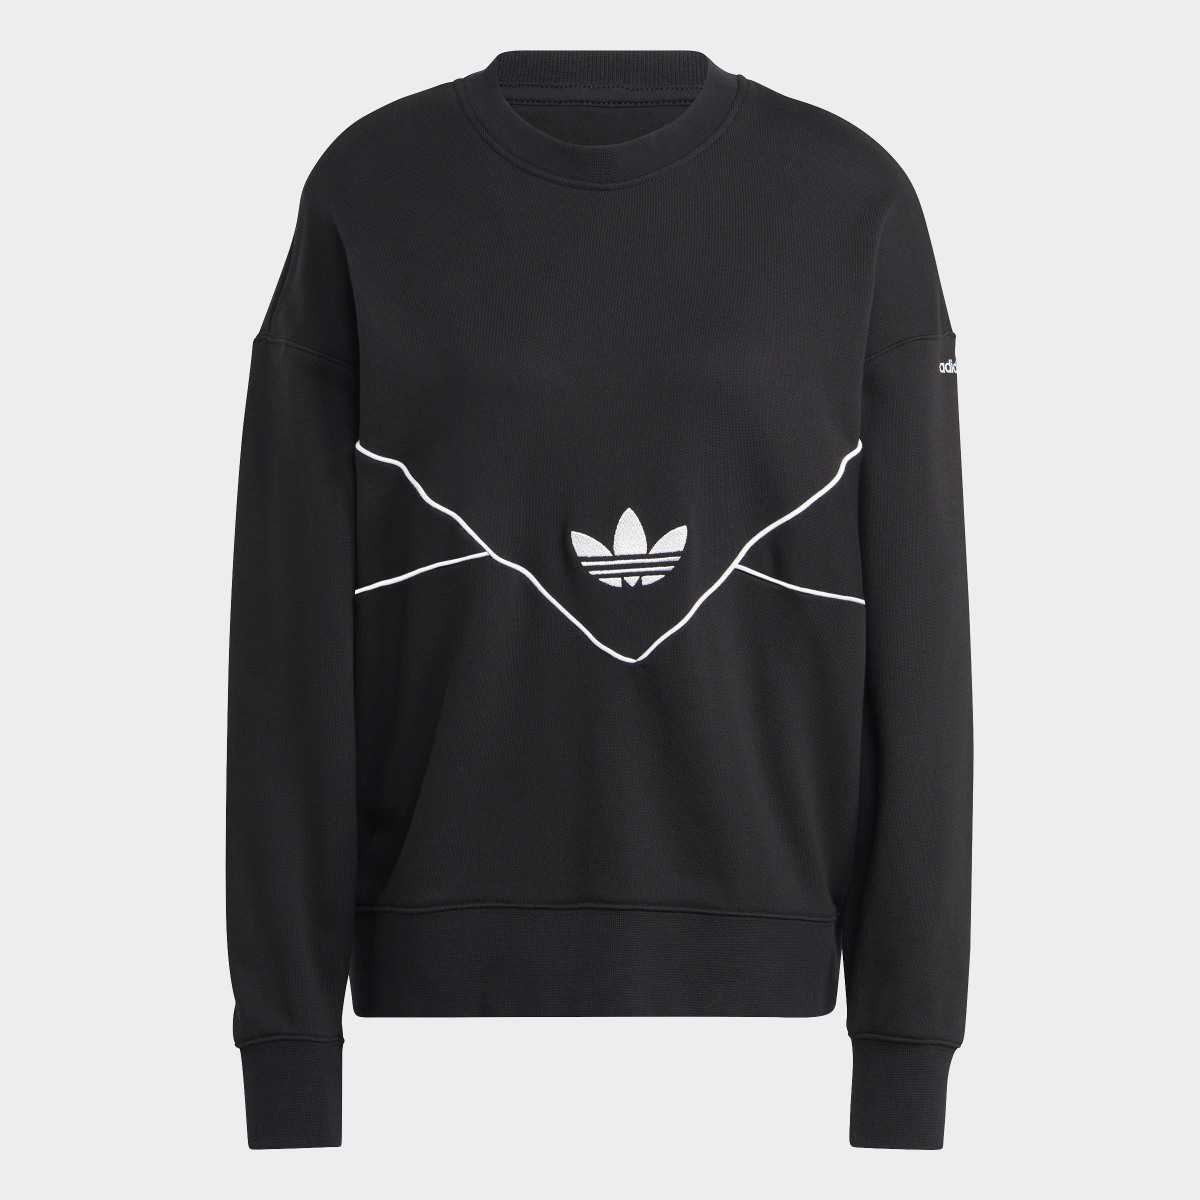 Adidas Boyfriend Crew Sweatshirt. 4